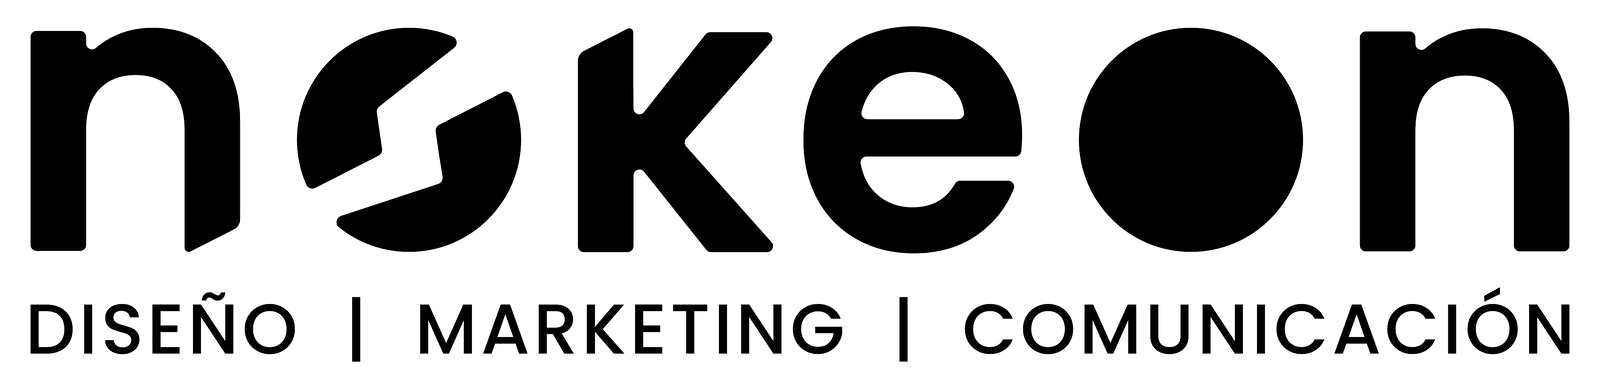 Agency Nokeon Values Web Performance